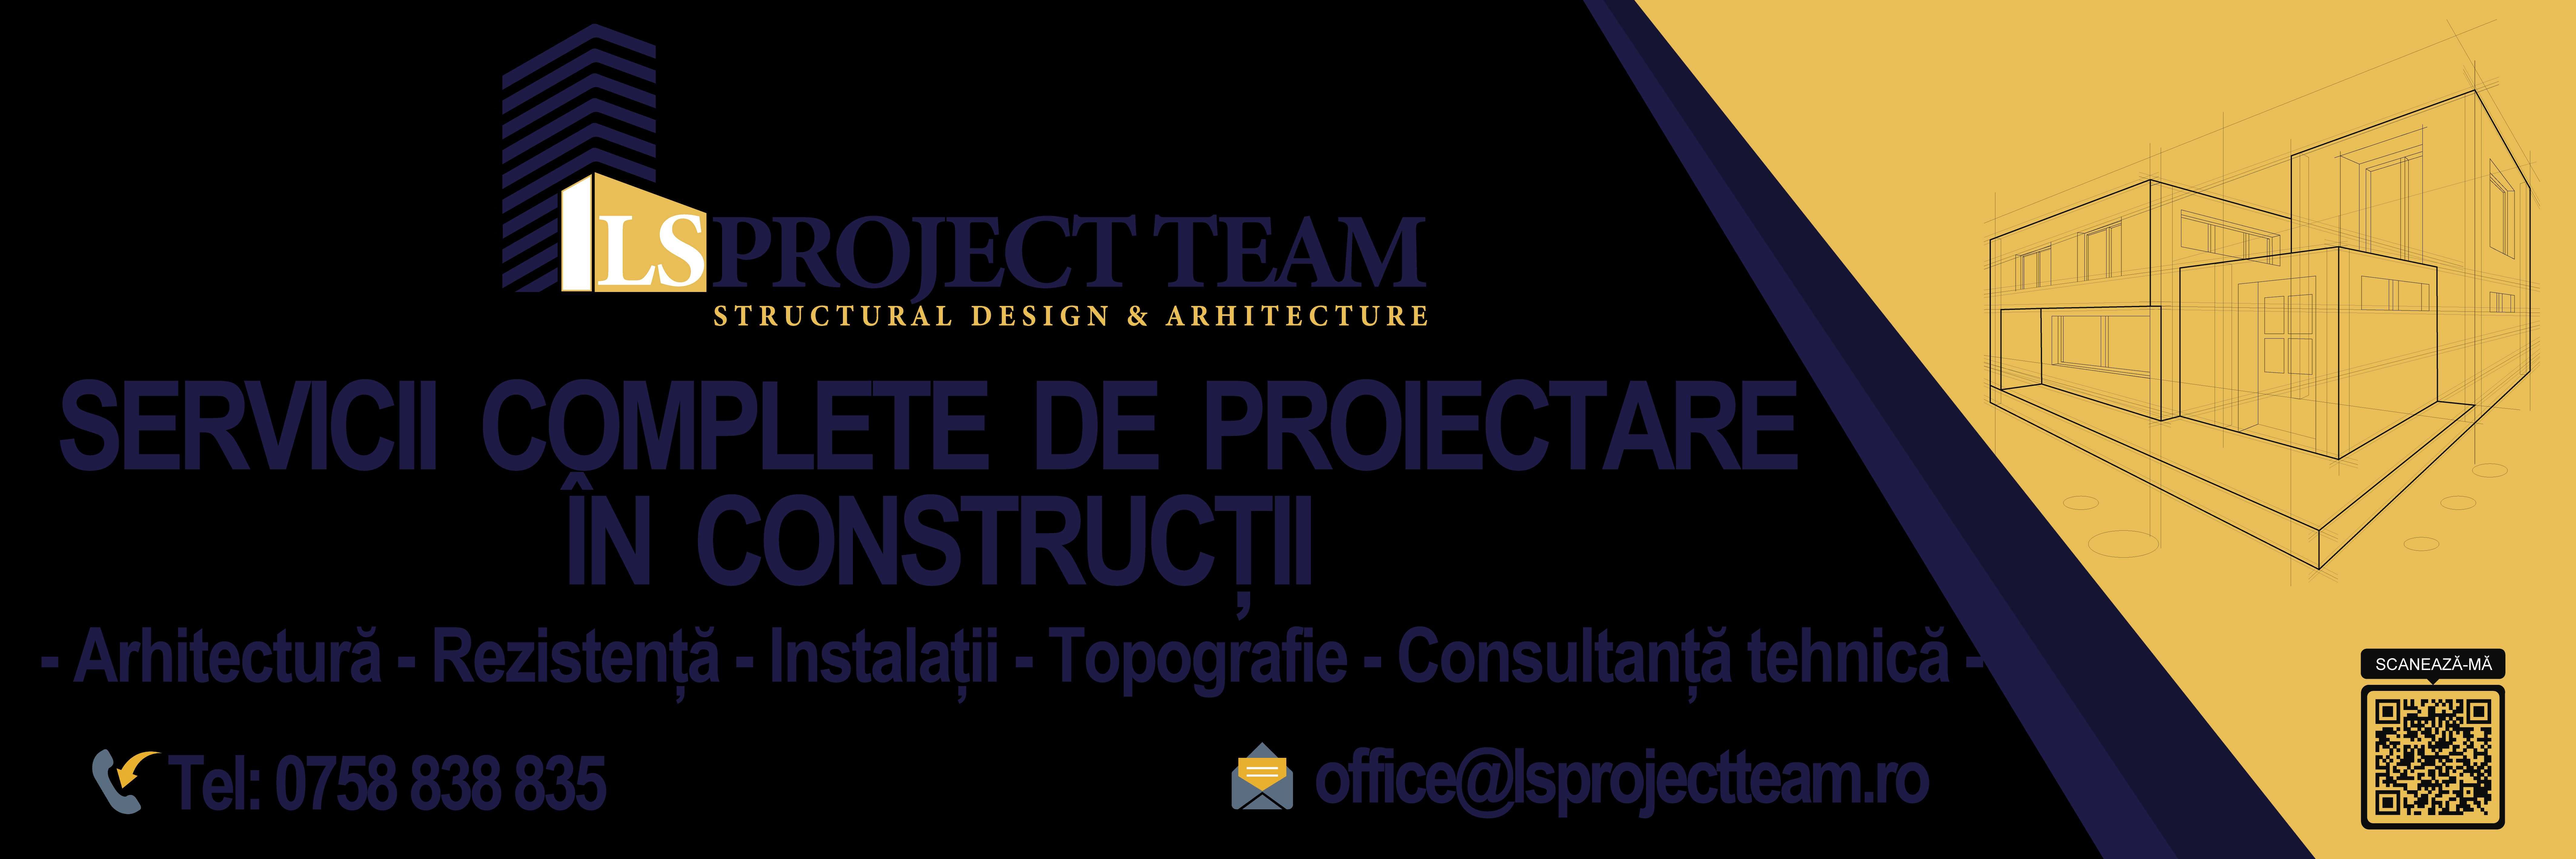 Servicii de proiectare-Arhitectura/Rezistenta/Instalatii/Expertize